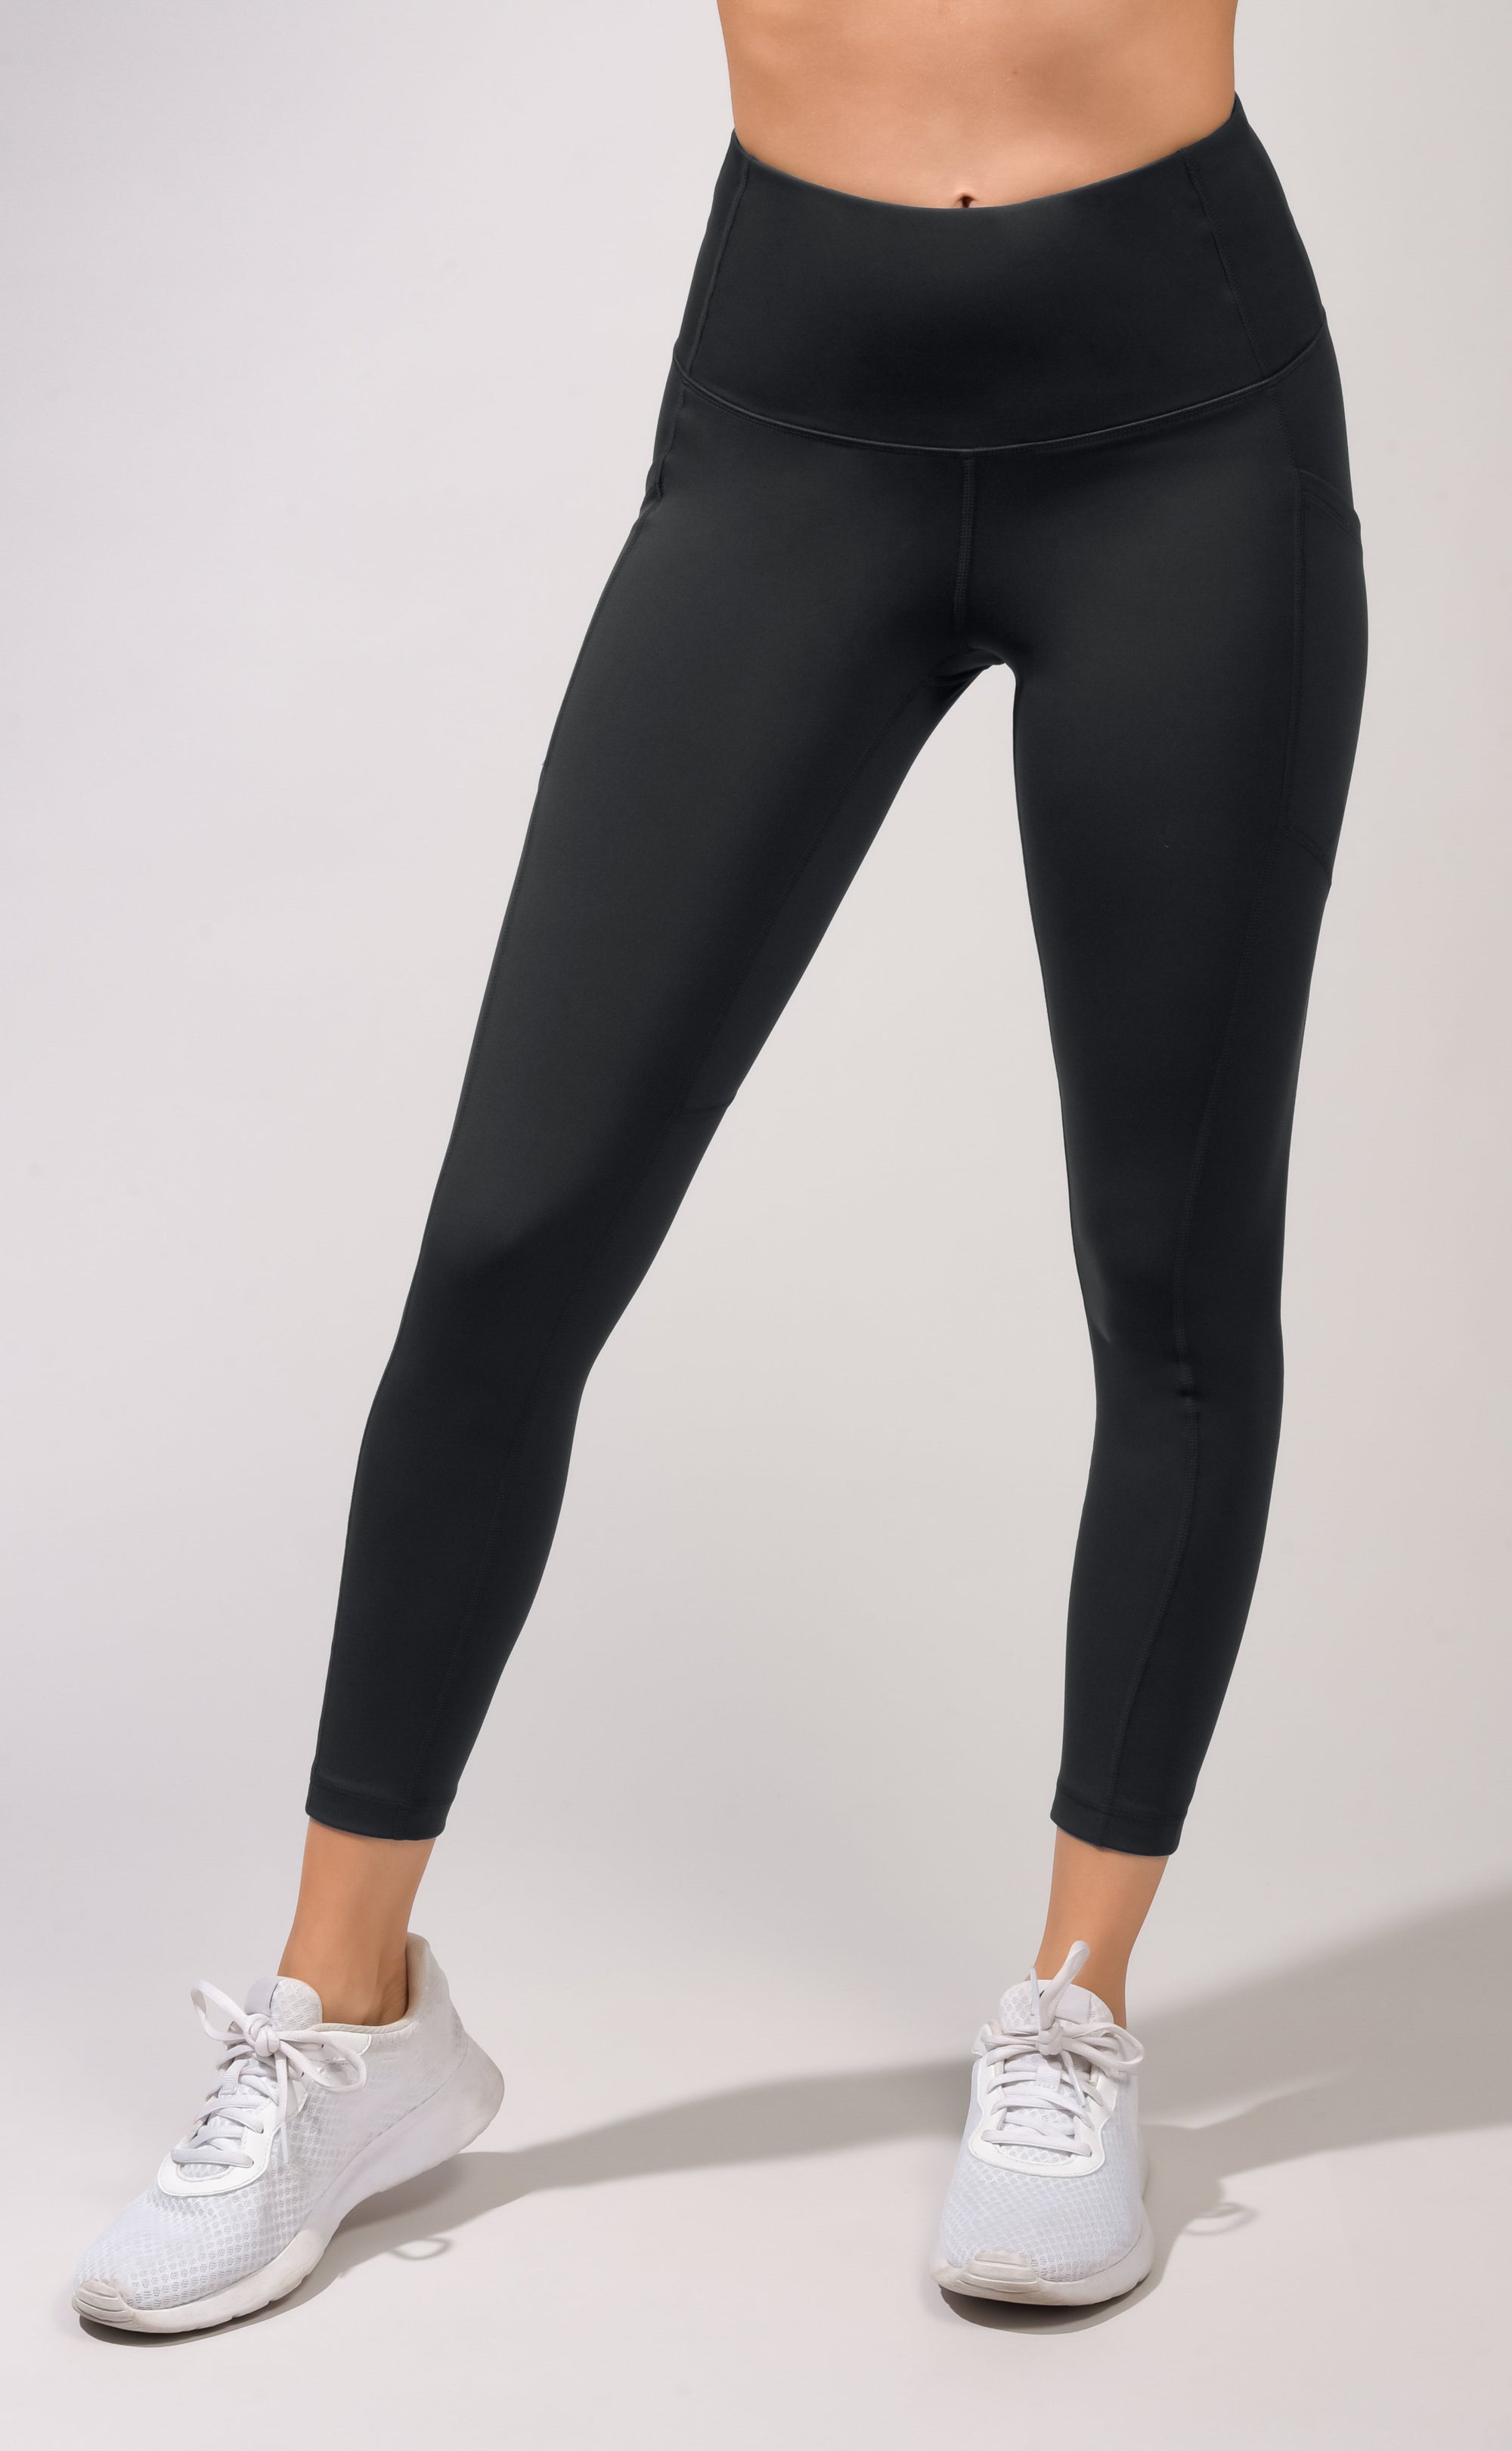 Yogalicious Lux Women's Athletic Yoga Pants Stretch Camo Black